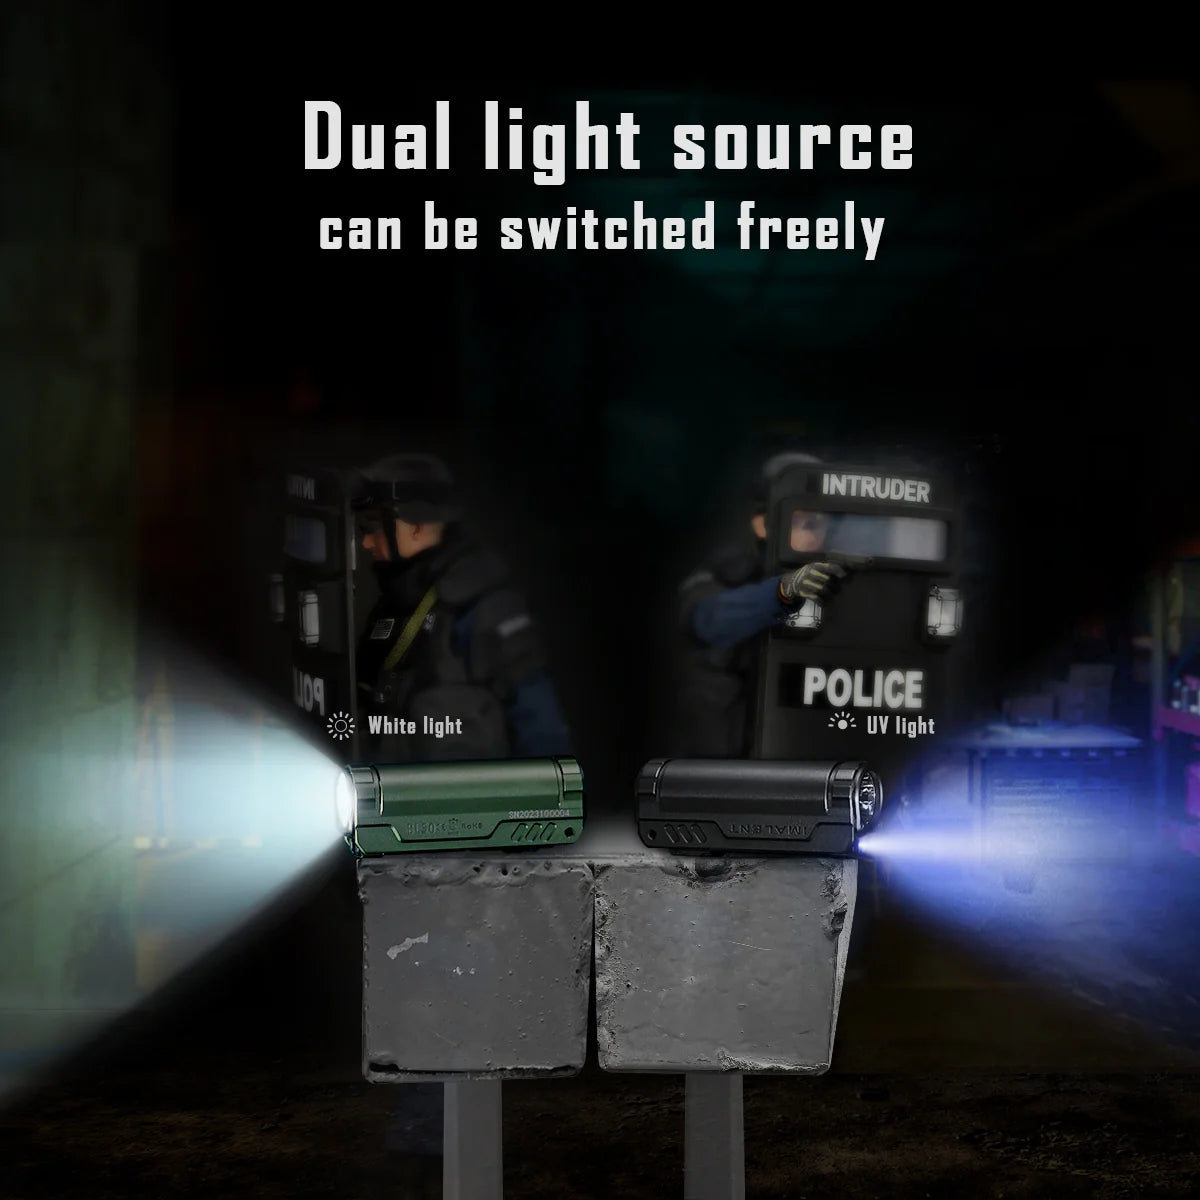 Dual Light Sources EDC Flashlight 3600 lumens and 365nm UV LED  BL50（ Default black color )